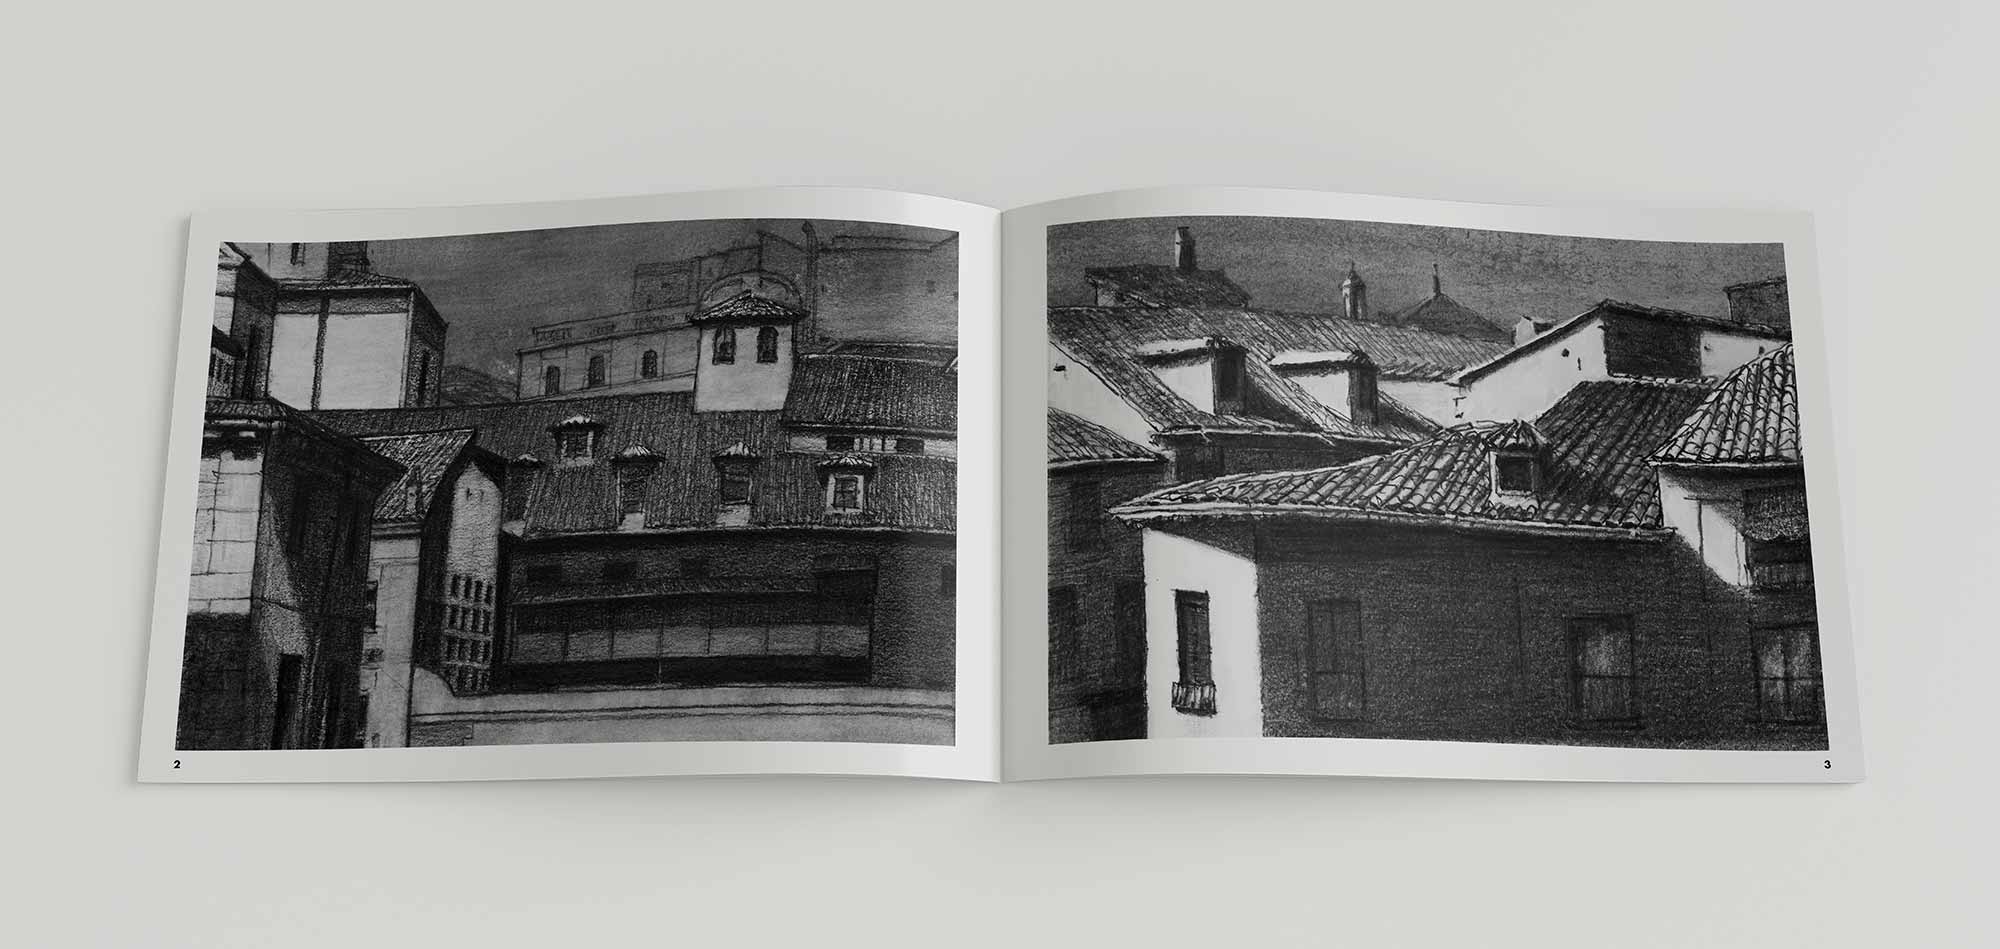 Mario Jodra Artist's Book "Viejo Madrid". Interior. Pages 02-03